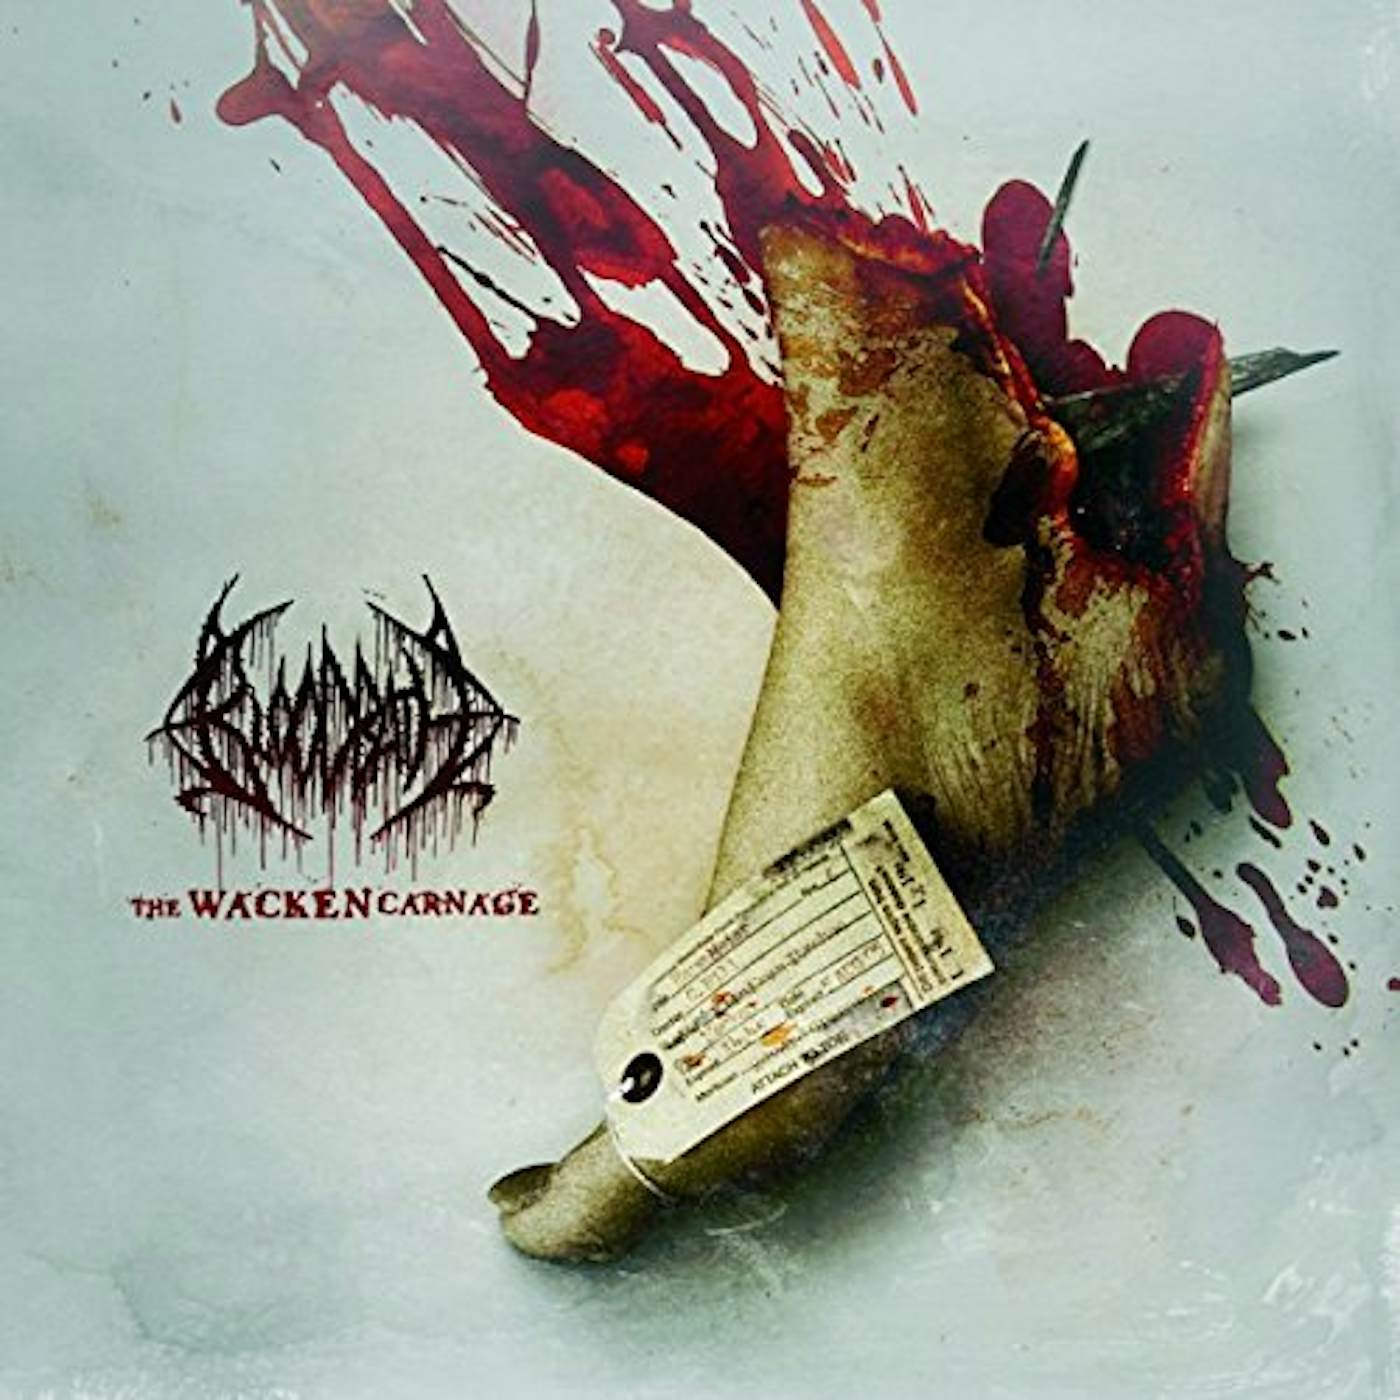 Bloodbath WACKEN CARNAGE Vinyl Record